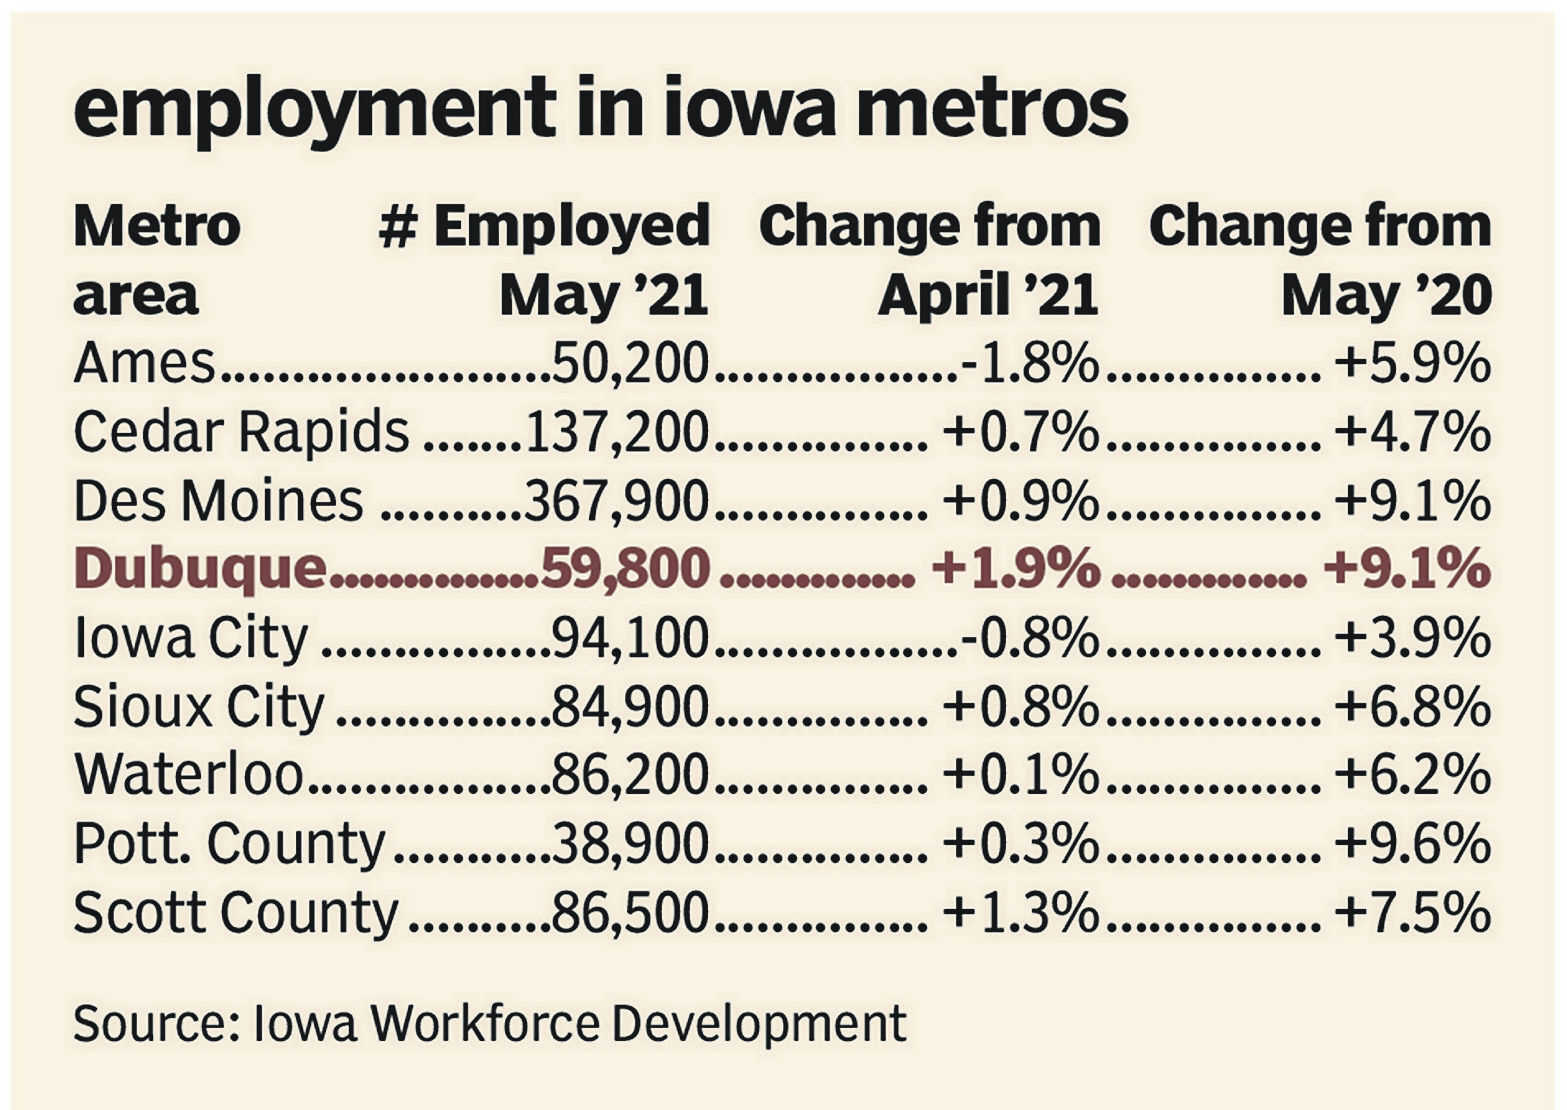 Nonfarm employment by Metropolitan Statistical Area in Iowa.    PHOTO CREDIT: Mike Day, Telegraph Herald